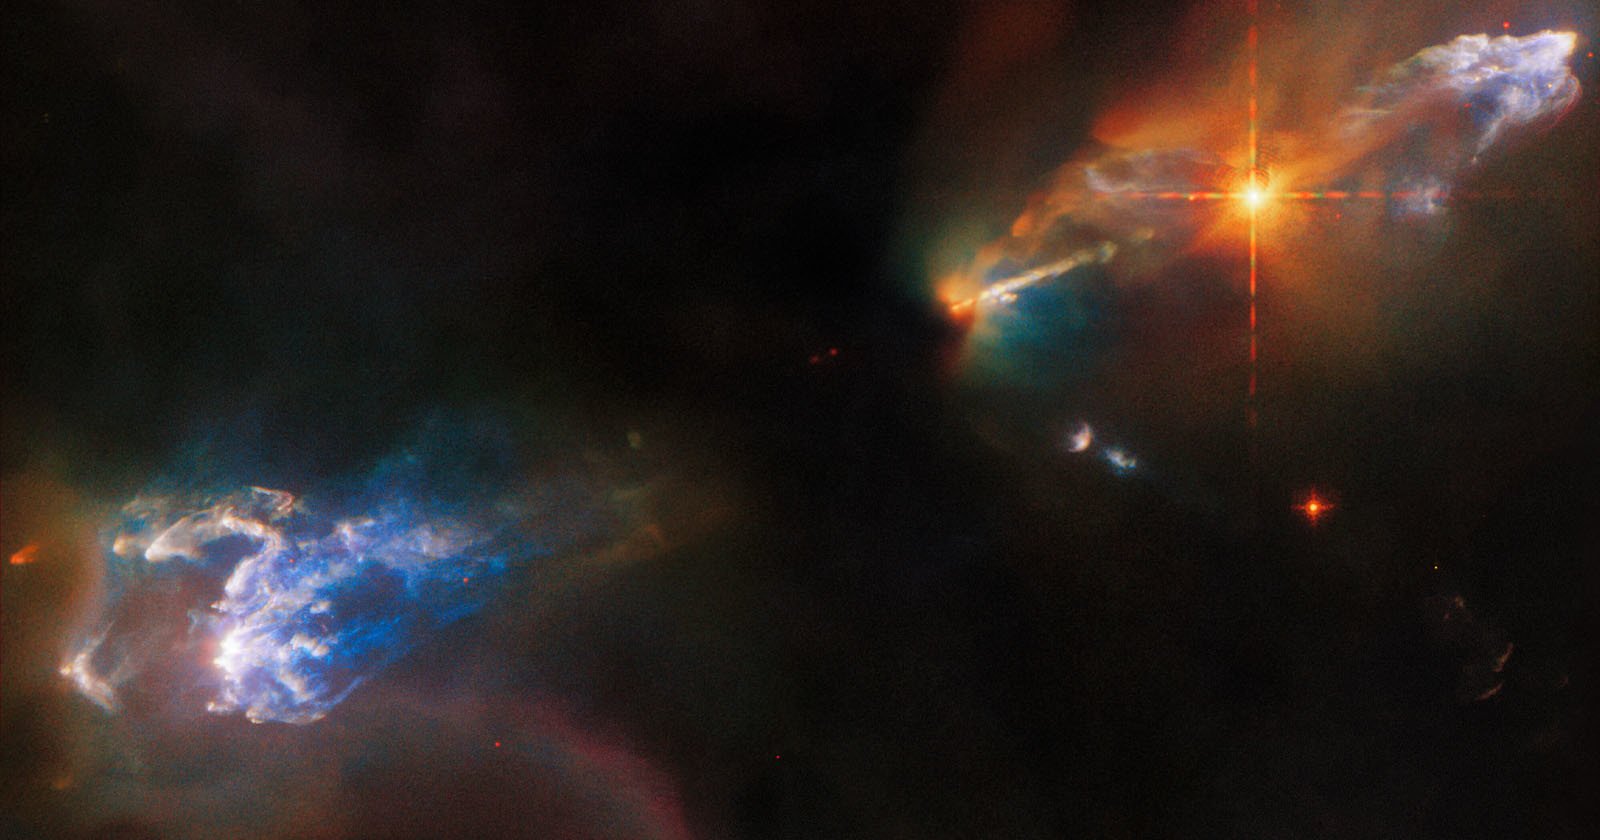 Hubble Captures a Spectacular Photo of a Turbulent Stellar Nursery